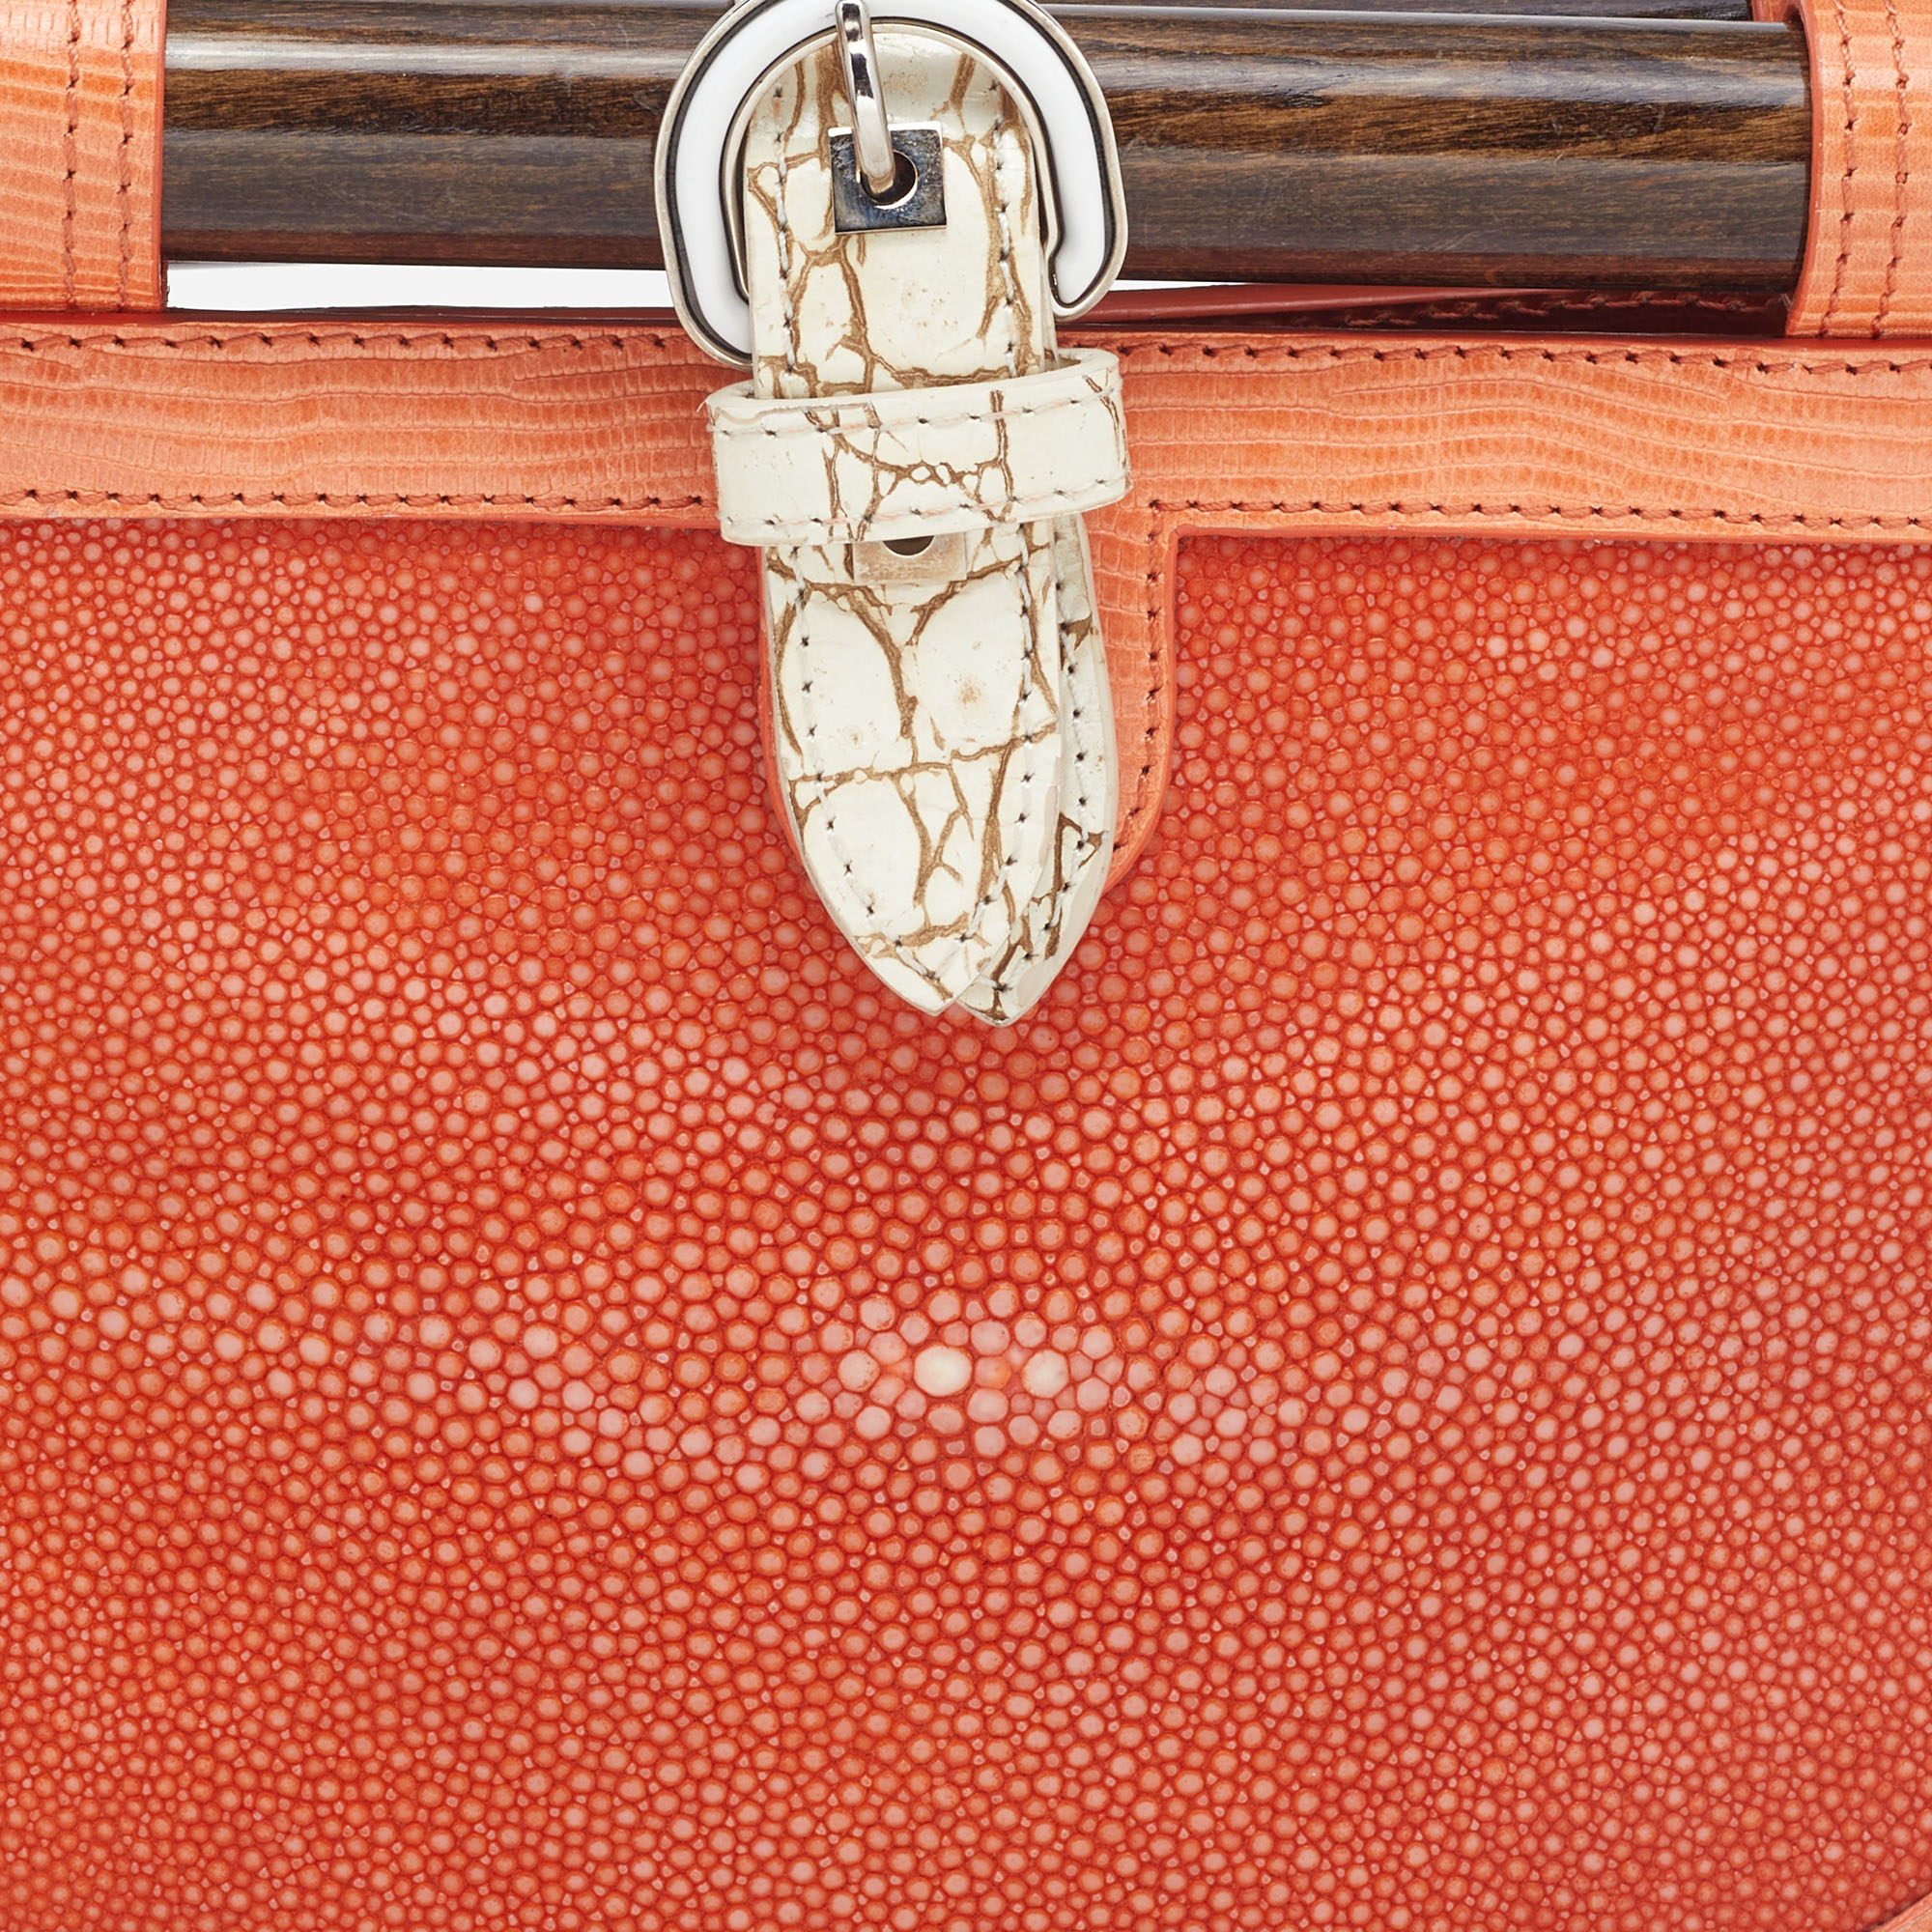 Proenza Schouler Orange/White Textured Leather And Stingray Tika Clutch Bag